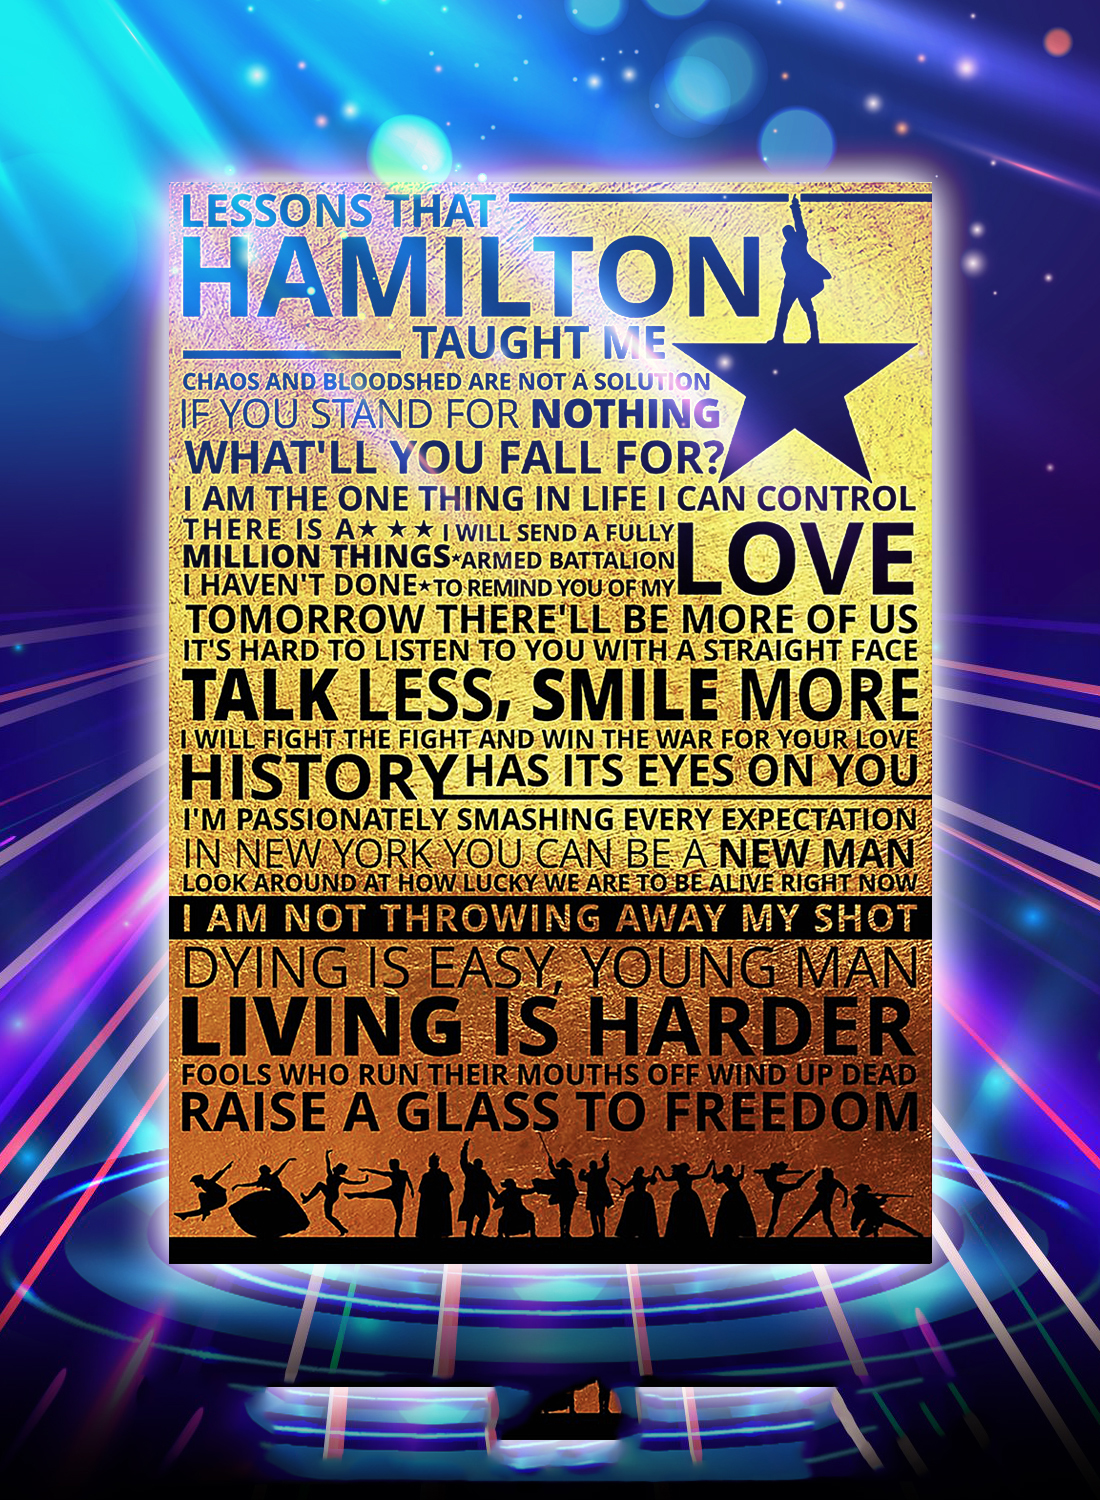 Lessons hamilton taught me poster